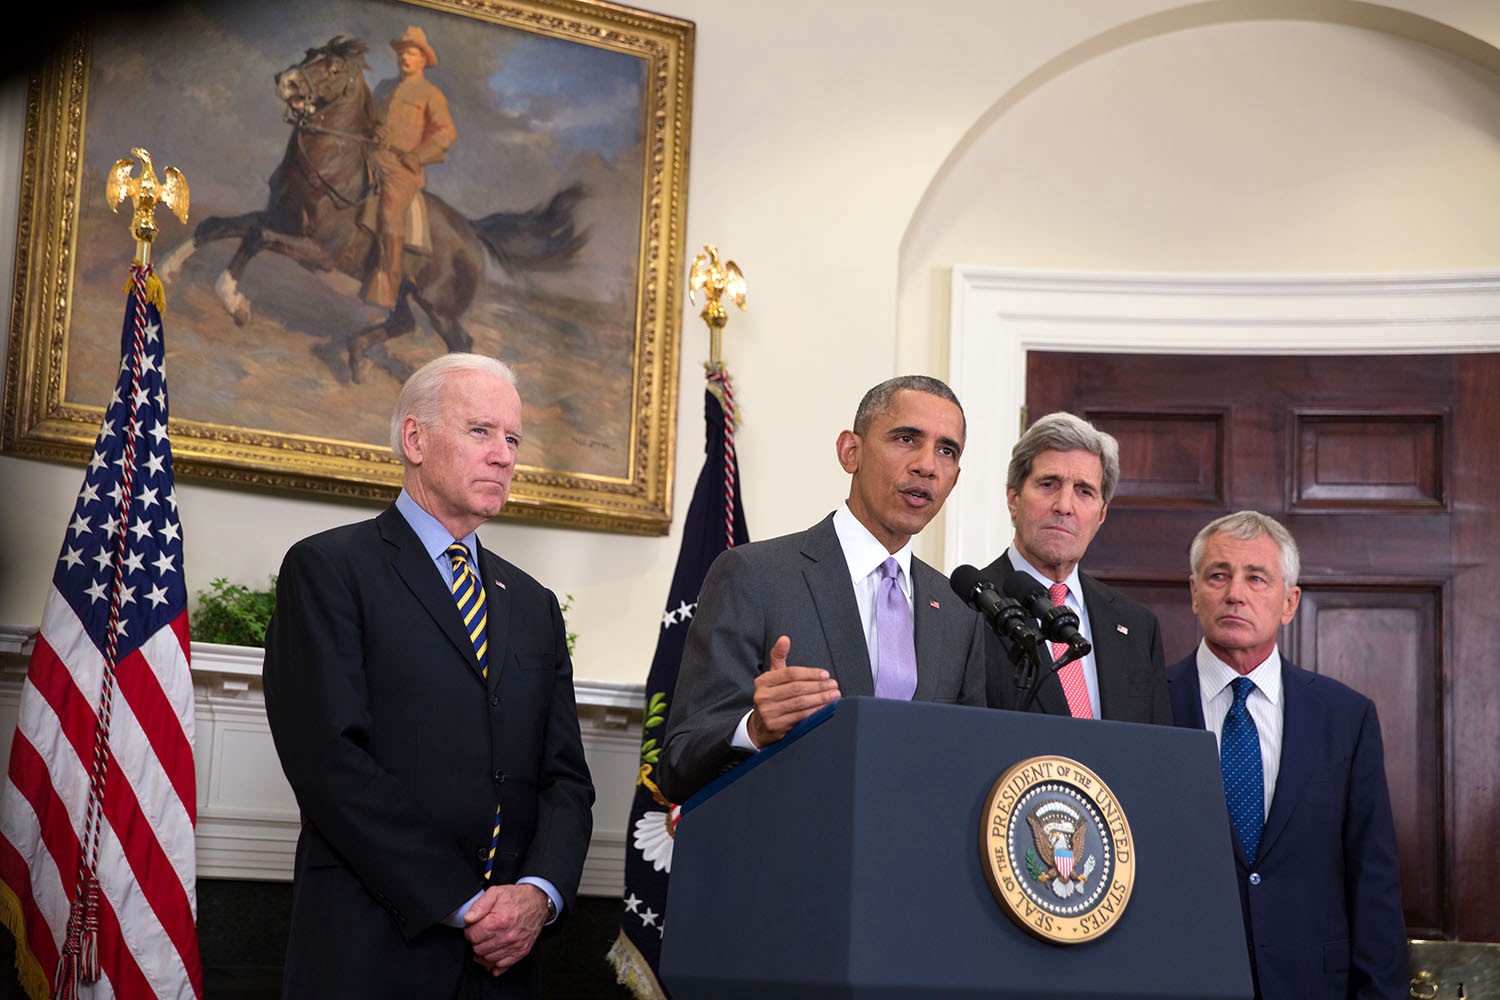 President Obama speaks from a podium surrounded by Vice President Joe Biden, Secretary of State John Kerry, and Secretary of Defense Chuck Hagel.